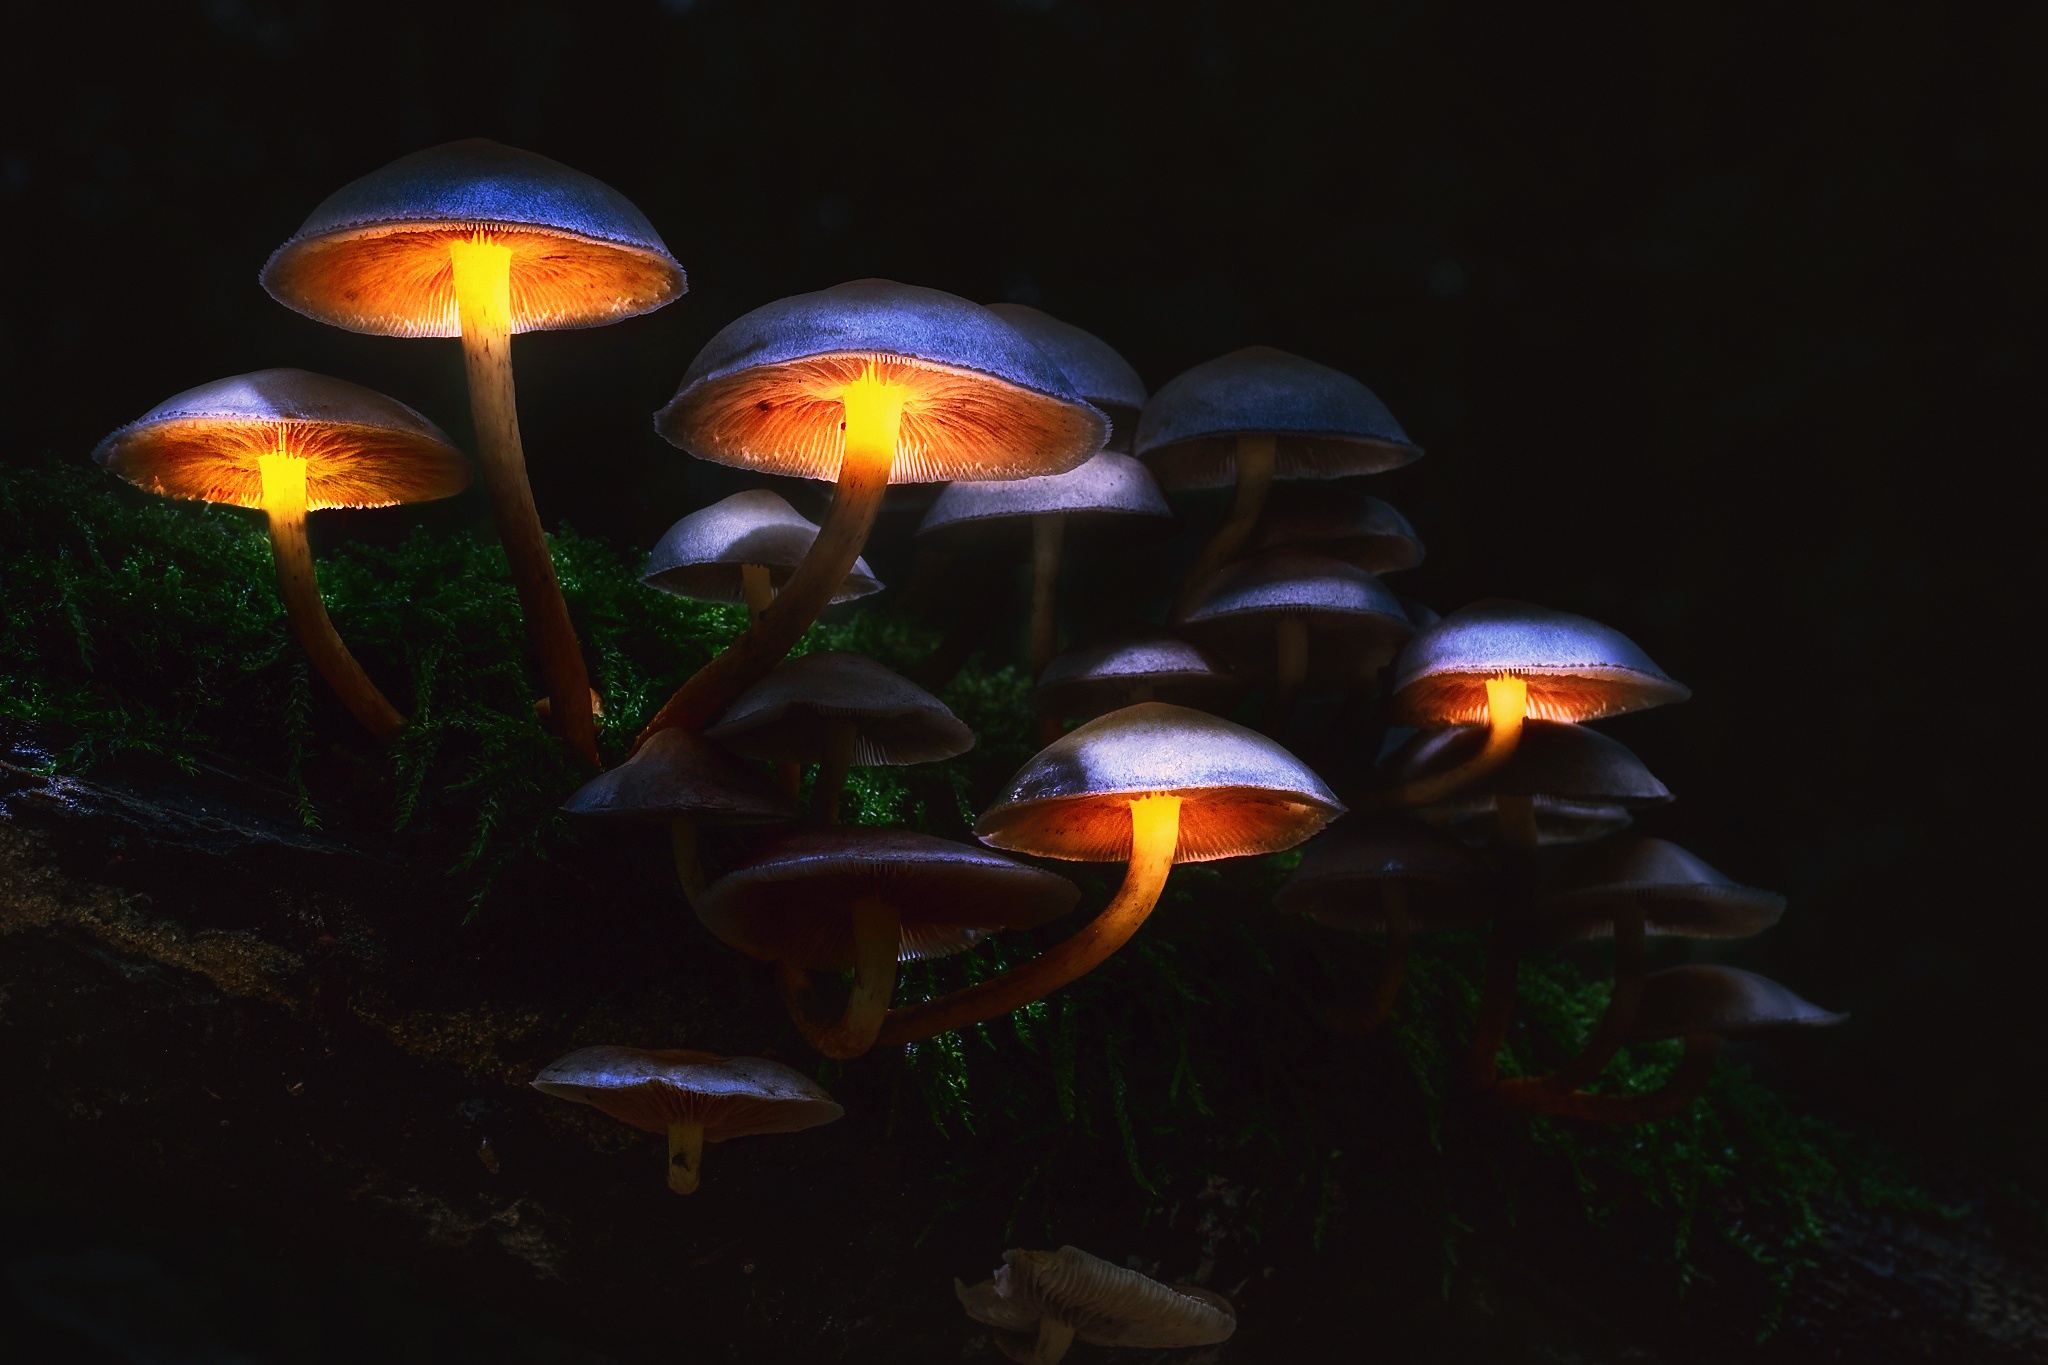 Mushroom HD Wallpaper and Background